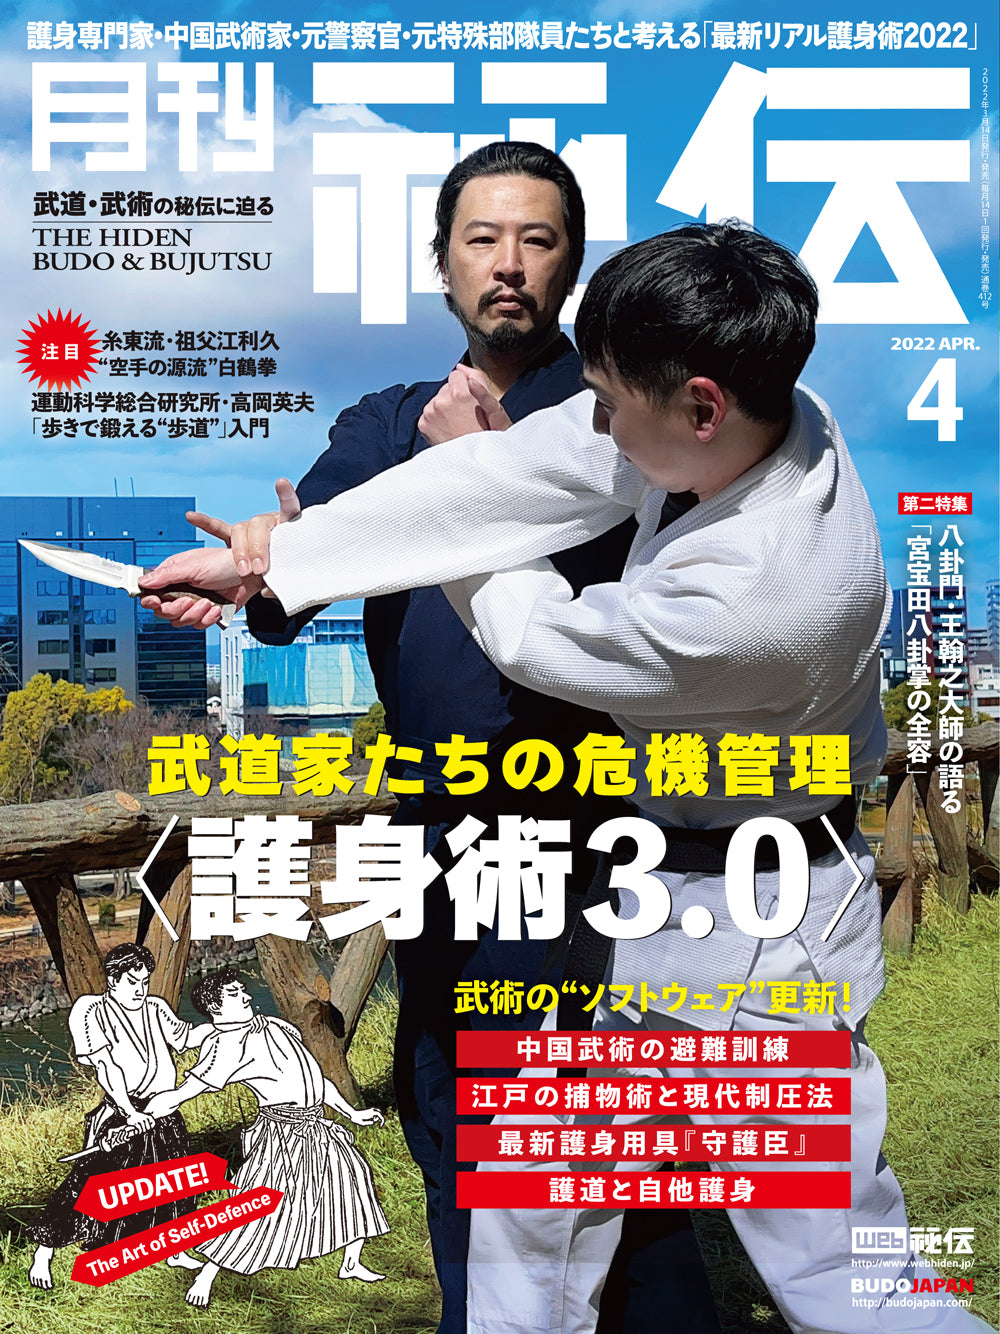 Hiden Budo & Bujutsu Magazine April 2022